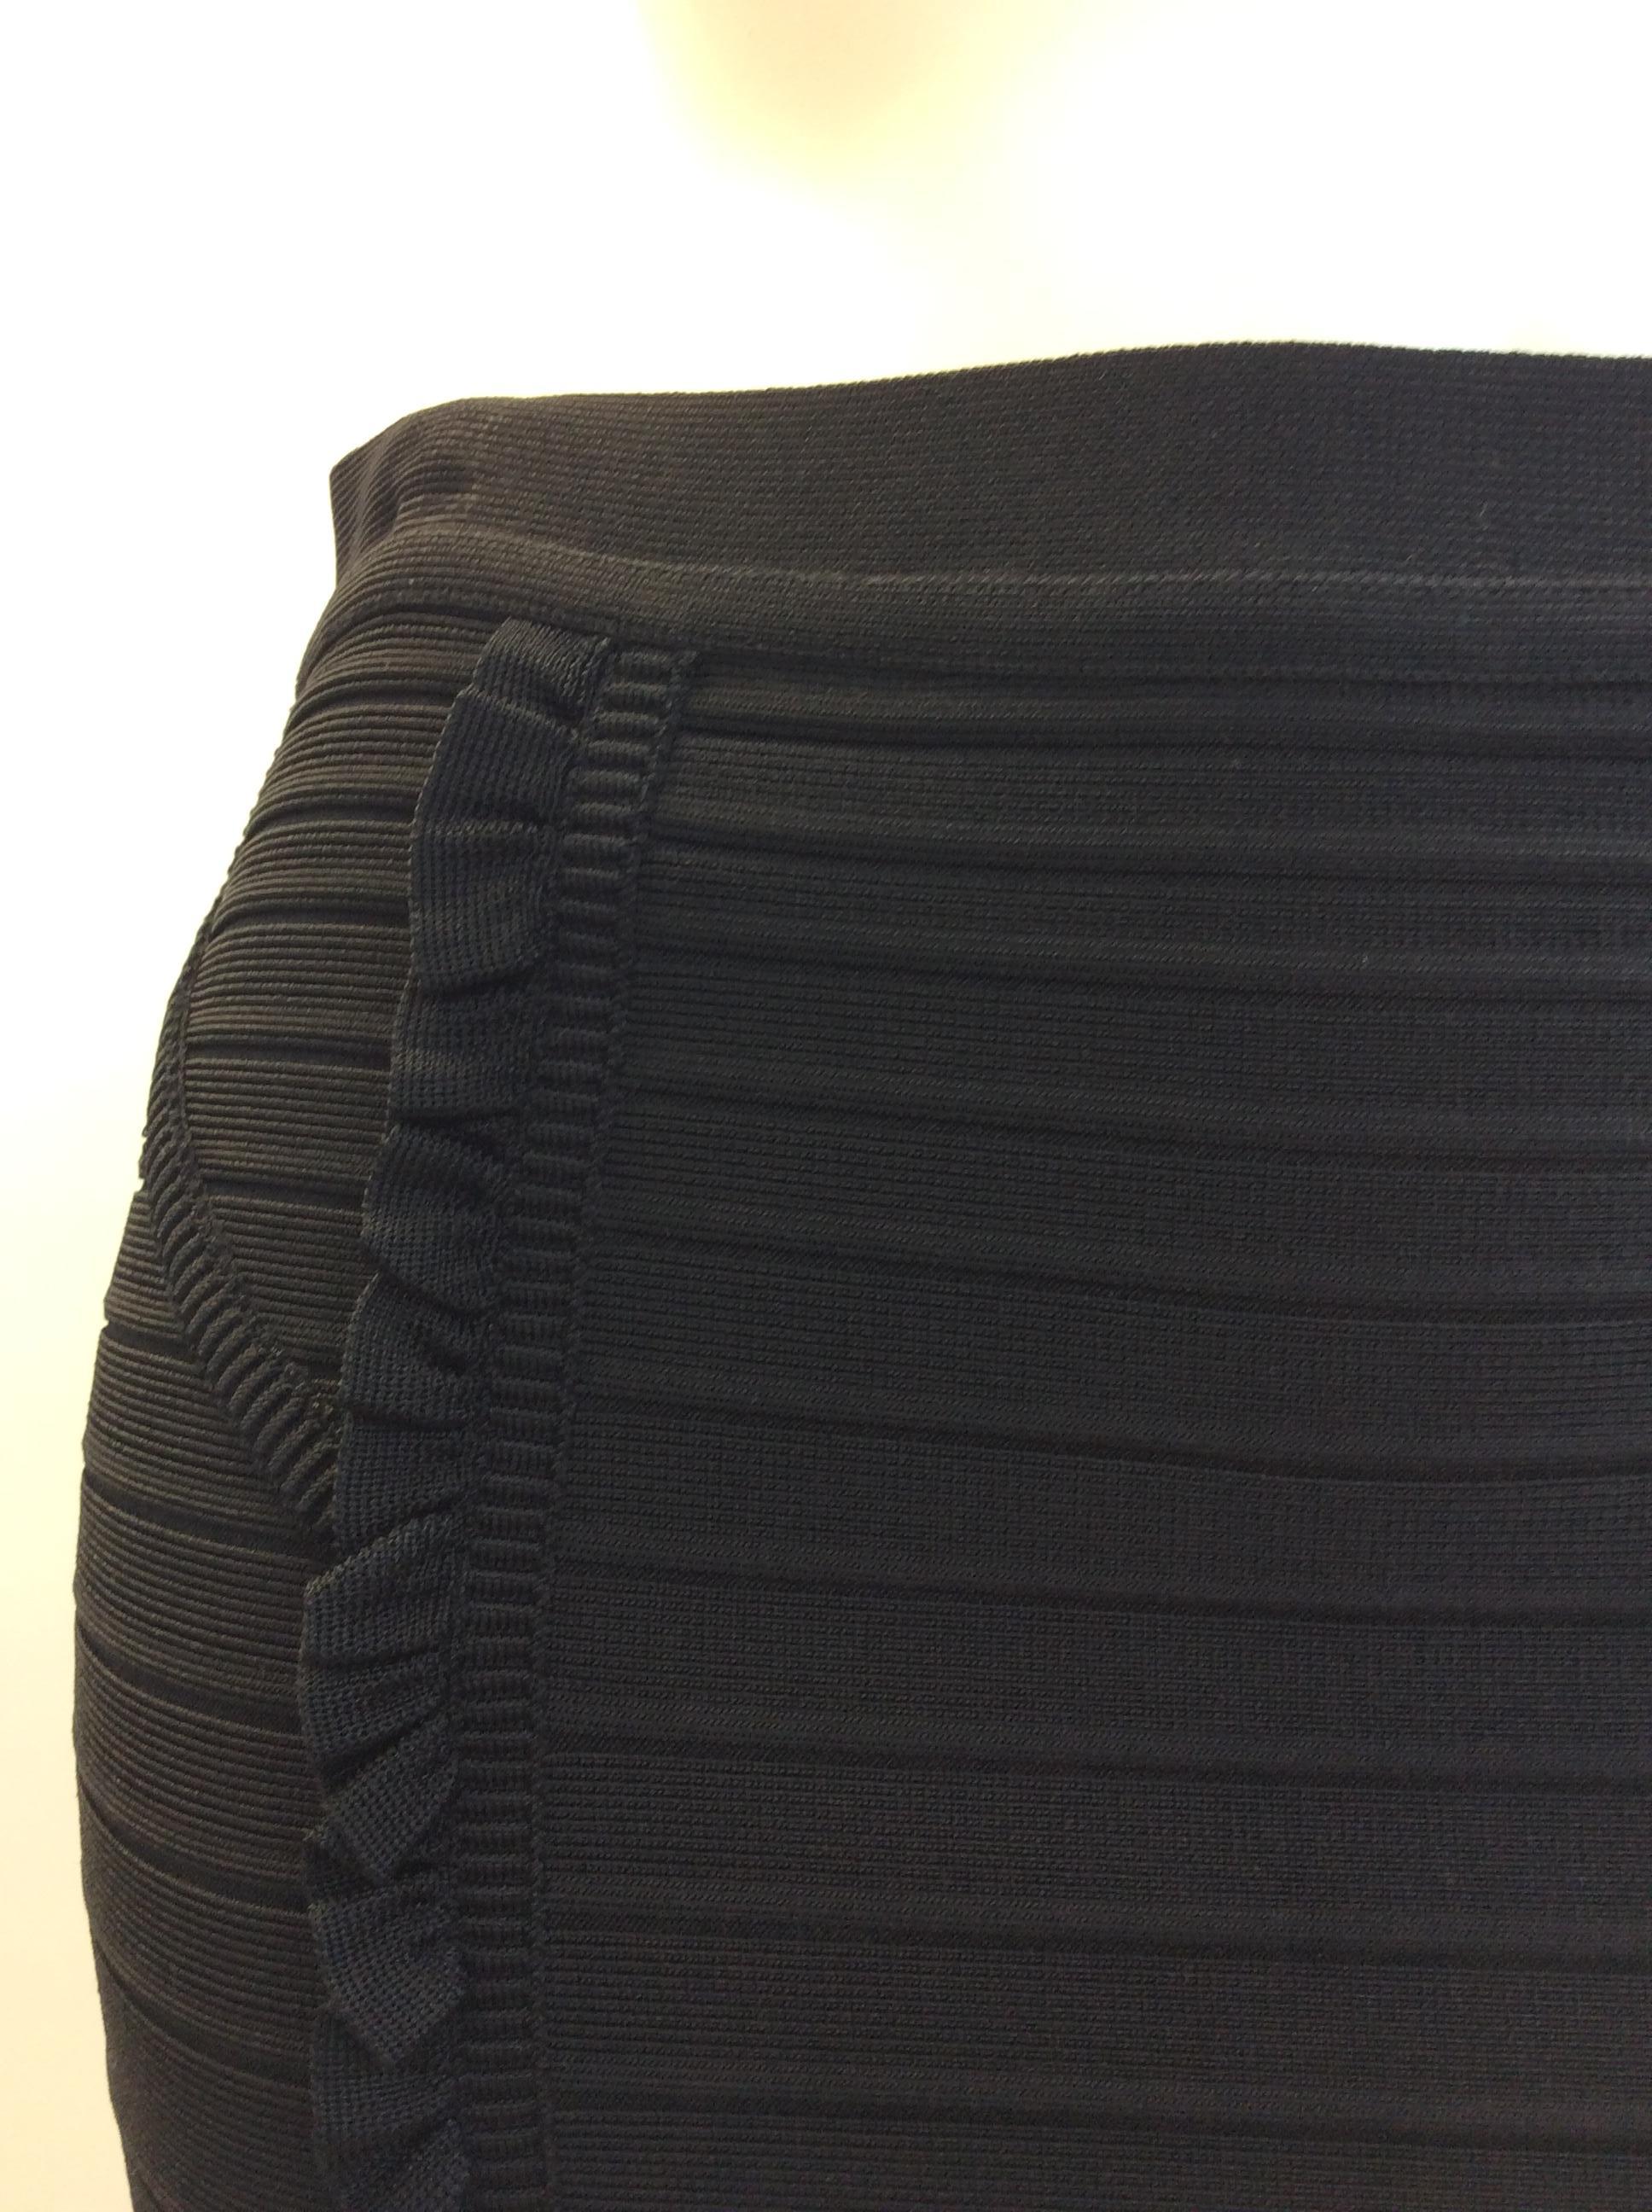 Herve Leger Black Ruffle Skirt NWT For Sale 1